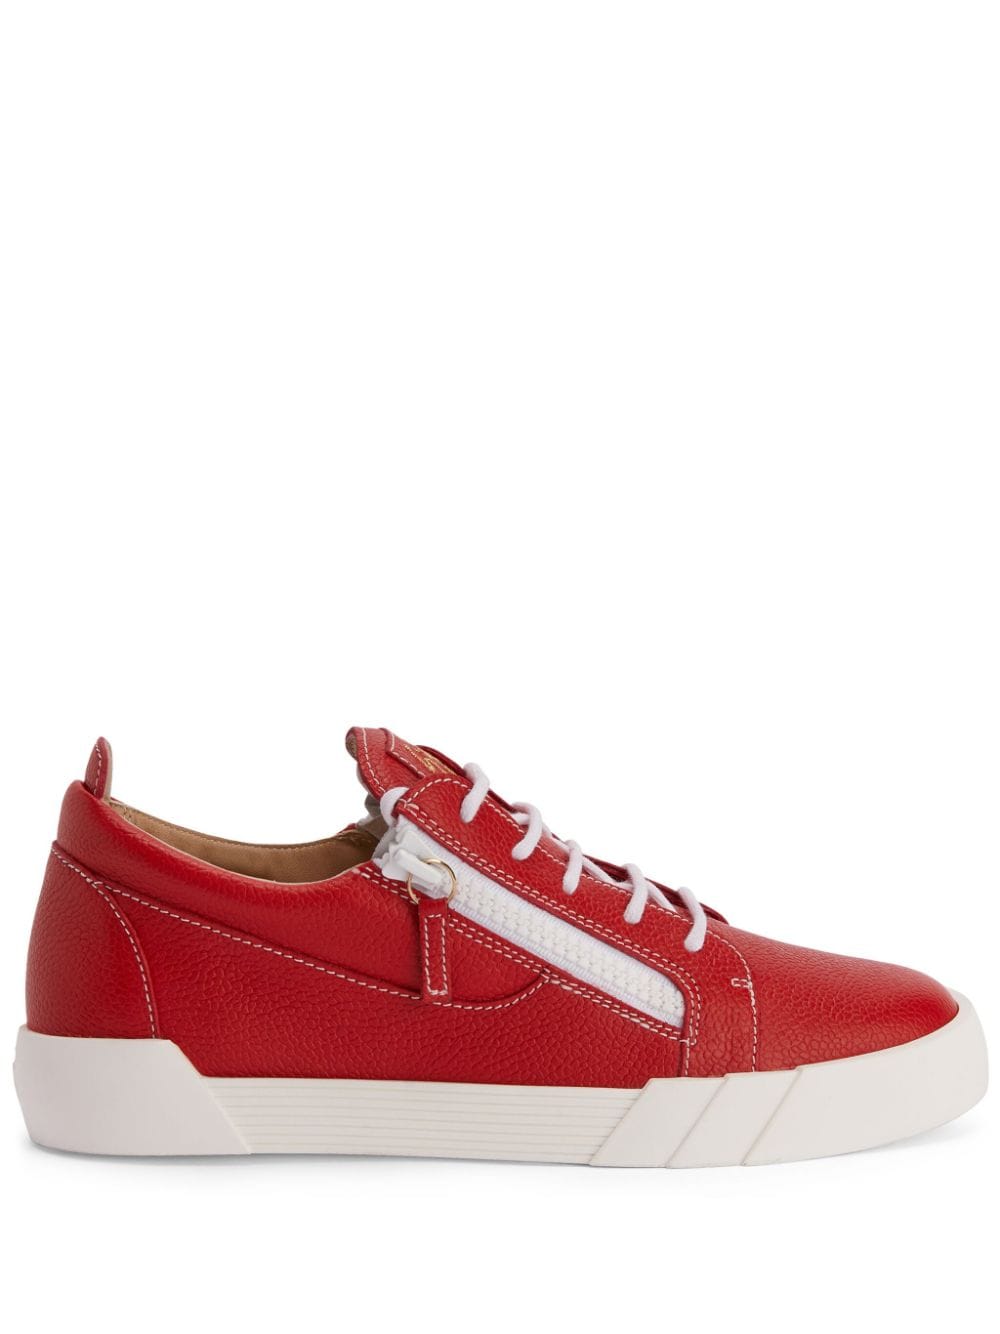 Giuseppe Zanotti Frankie leather sneakers - Red von Giuseppe Zanotti